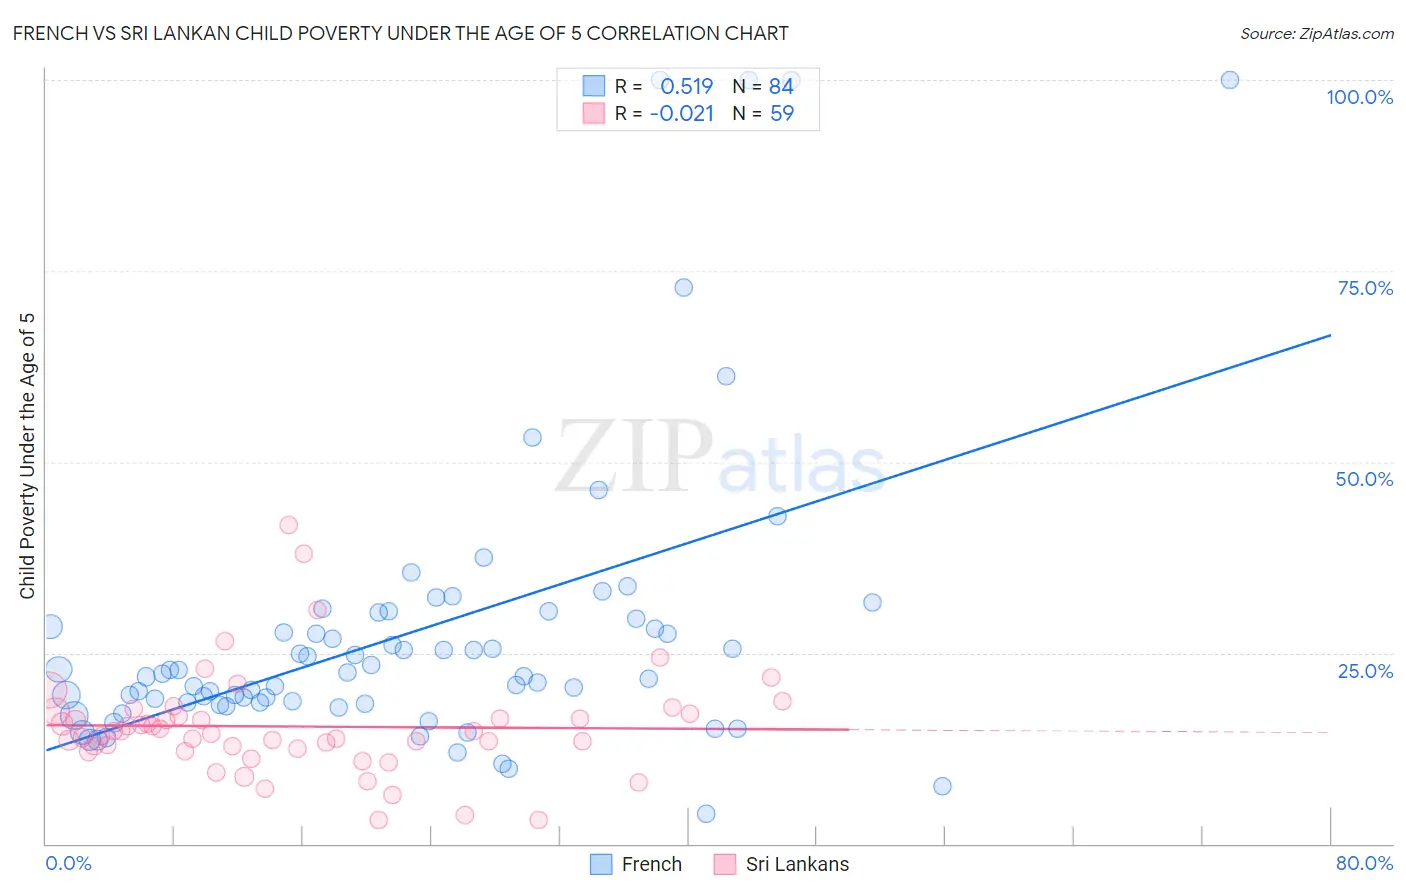 French vs Sri Lankan Child Poverty Under the Age of 5